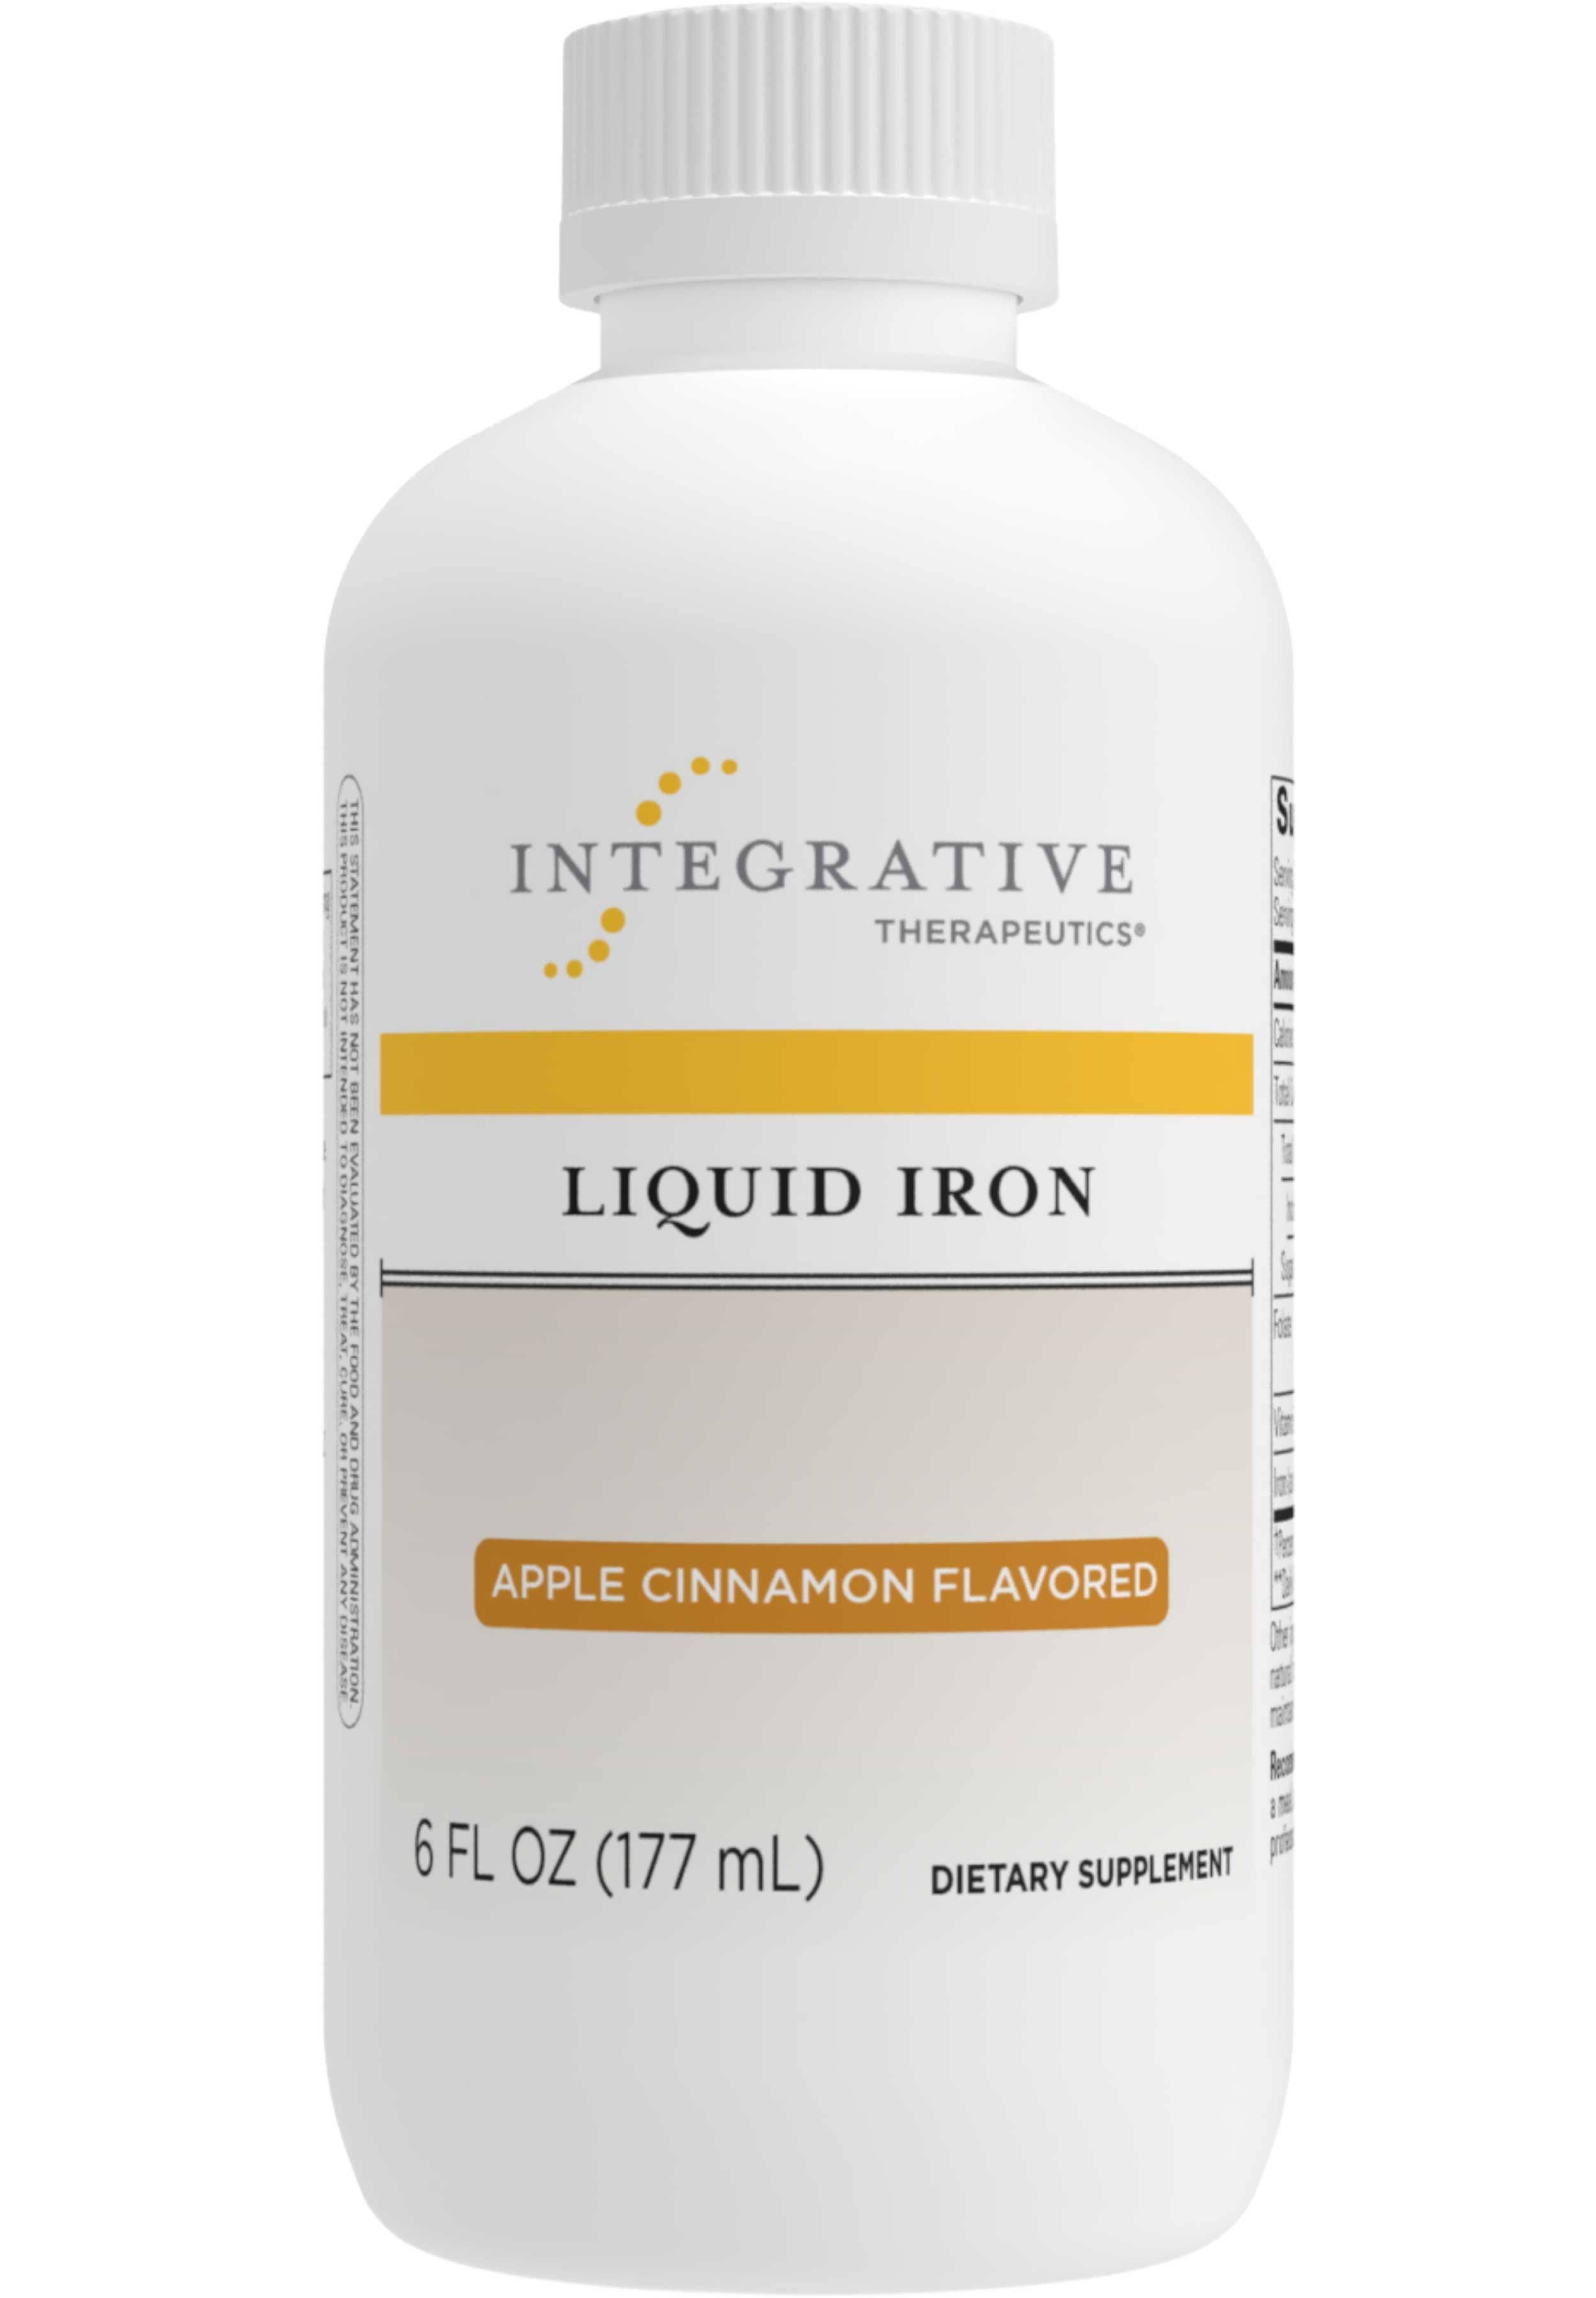 Integrative Therapeutics Liquid Iron